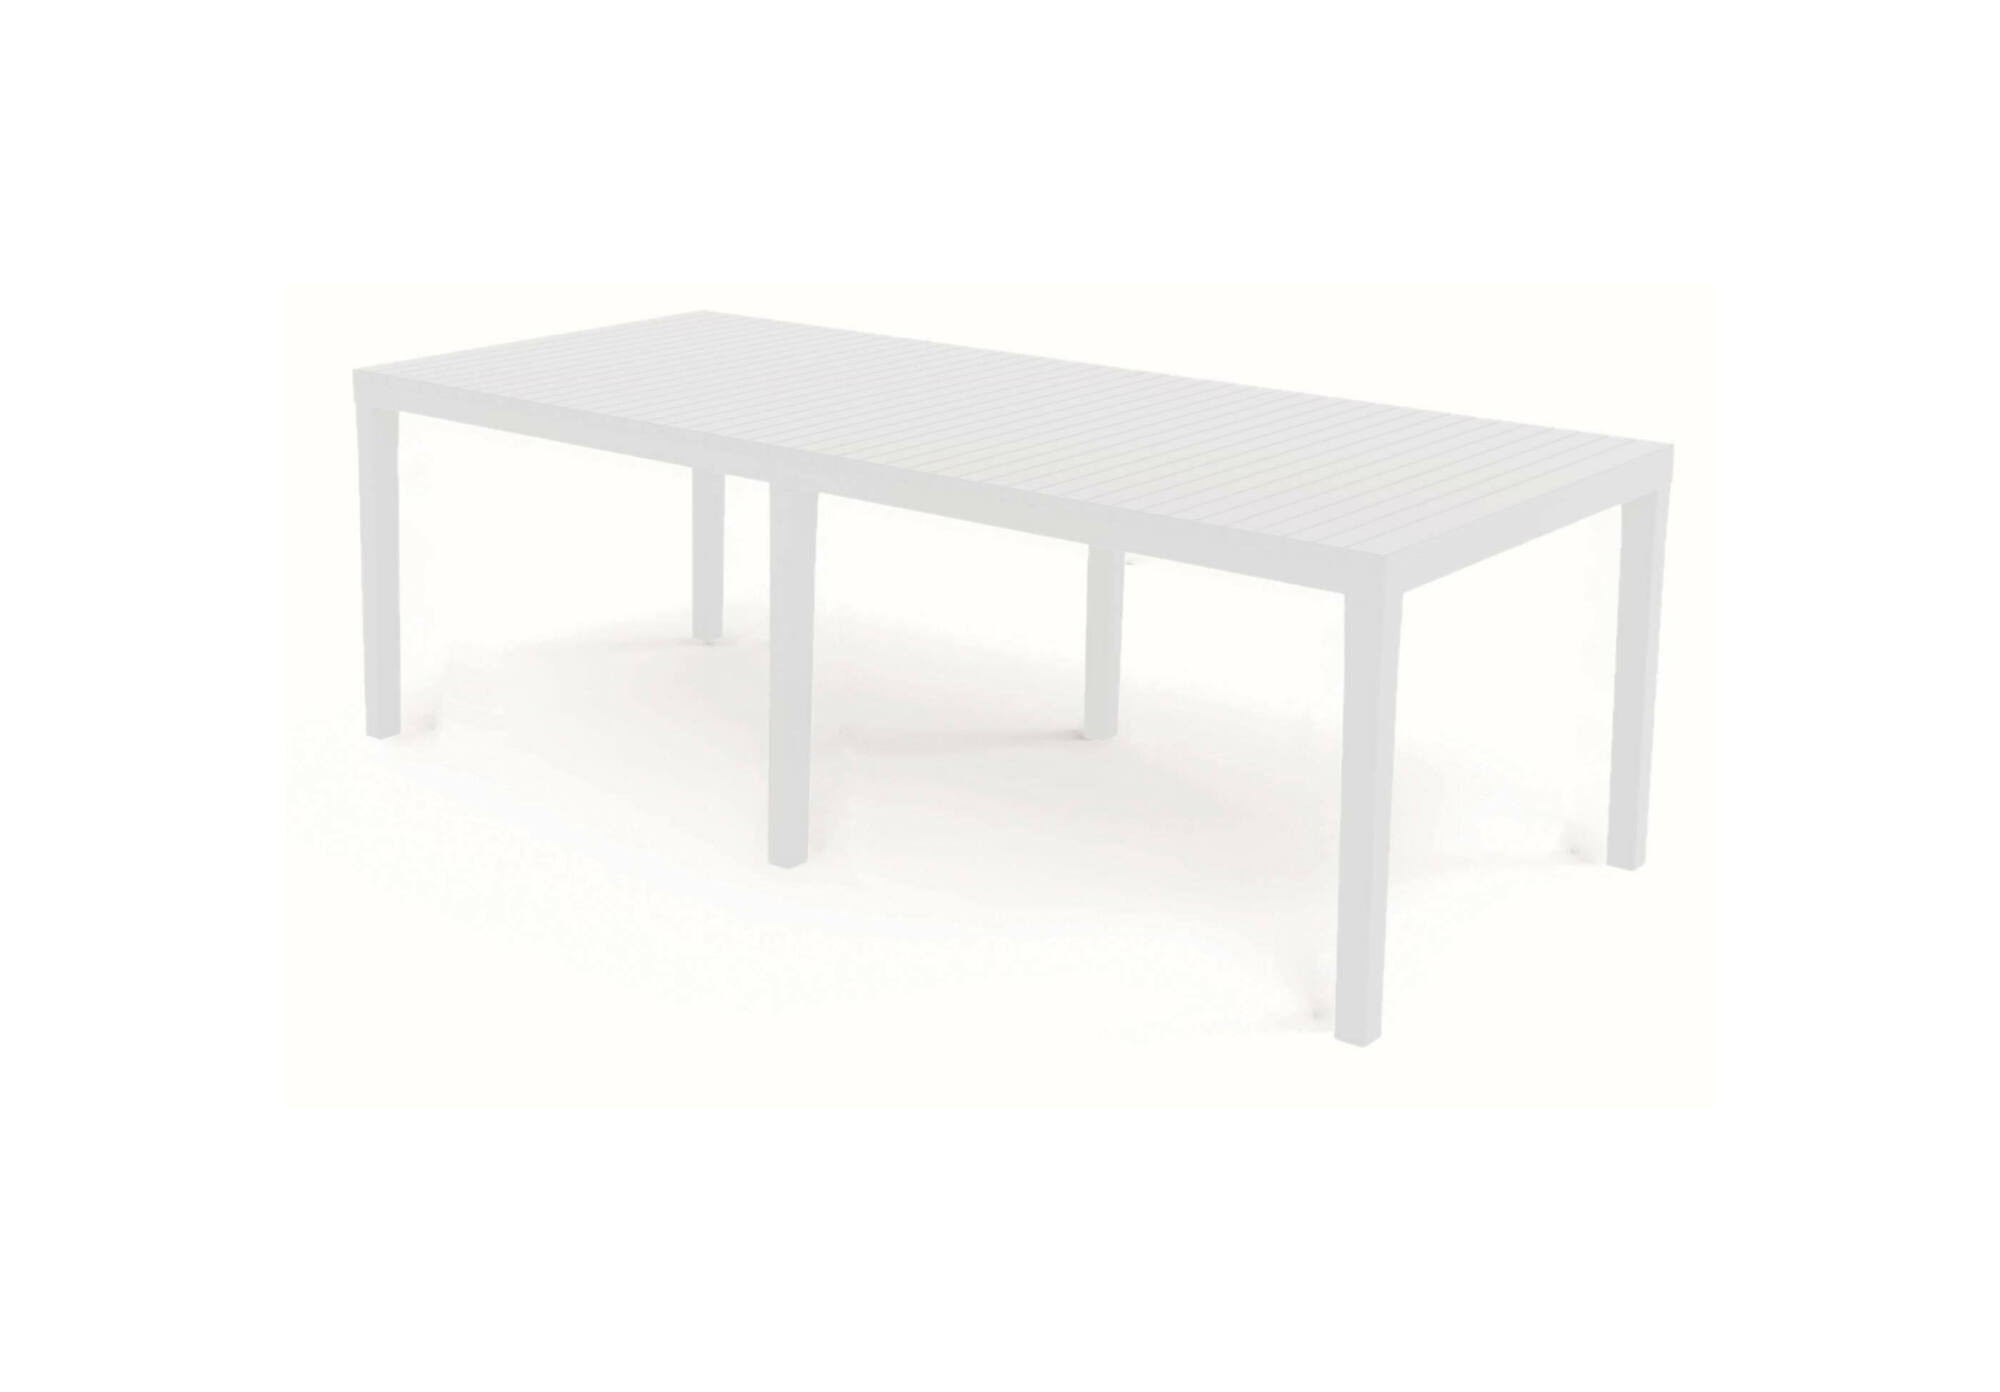 Table d'extérieur en polypropylène blanc 150/220x90 cm